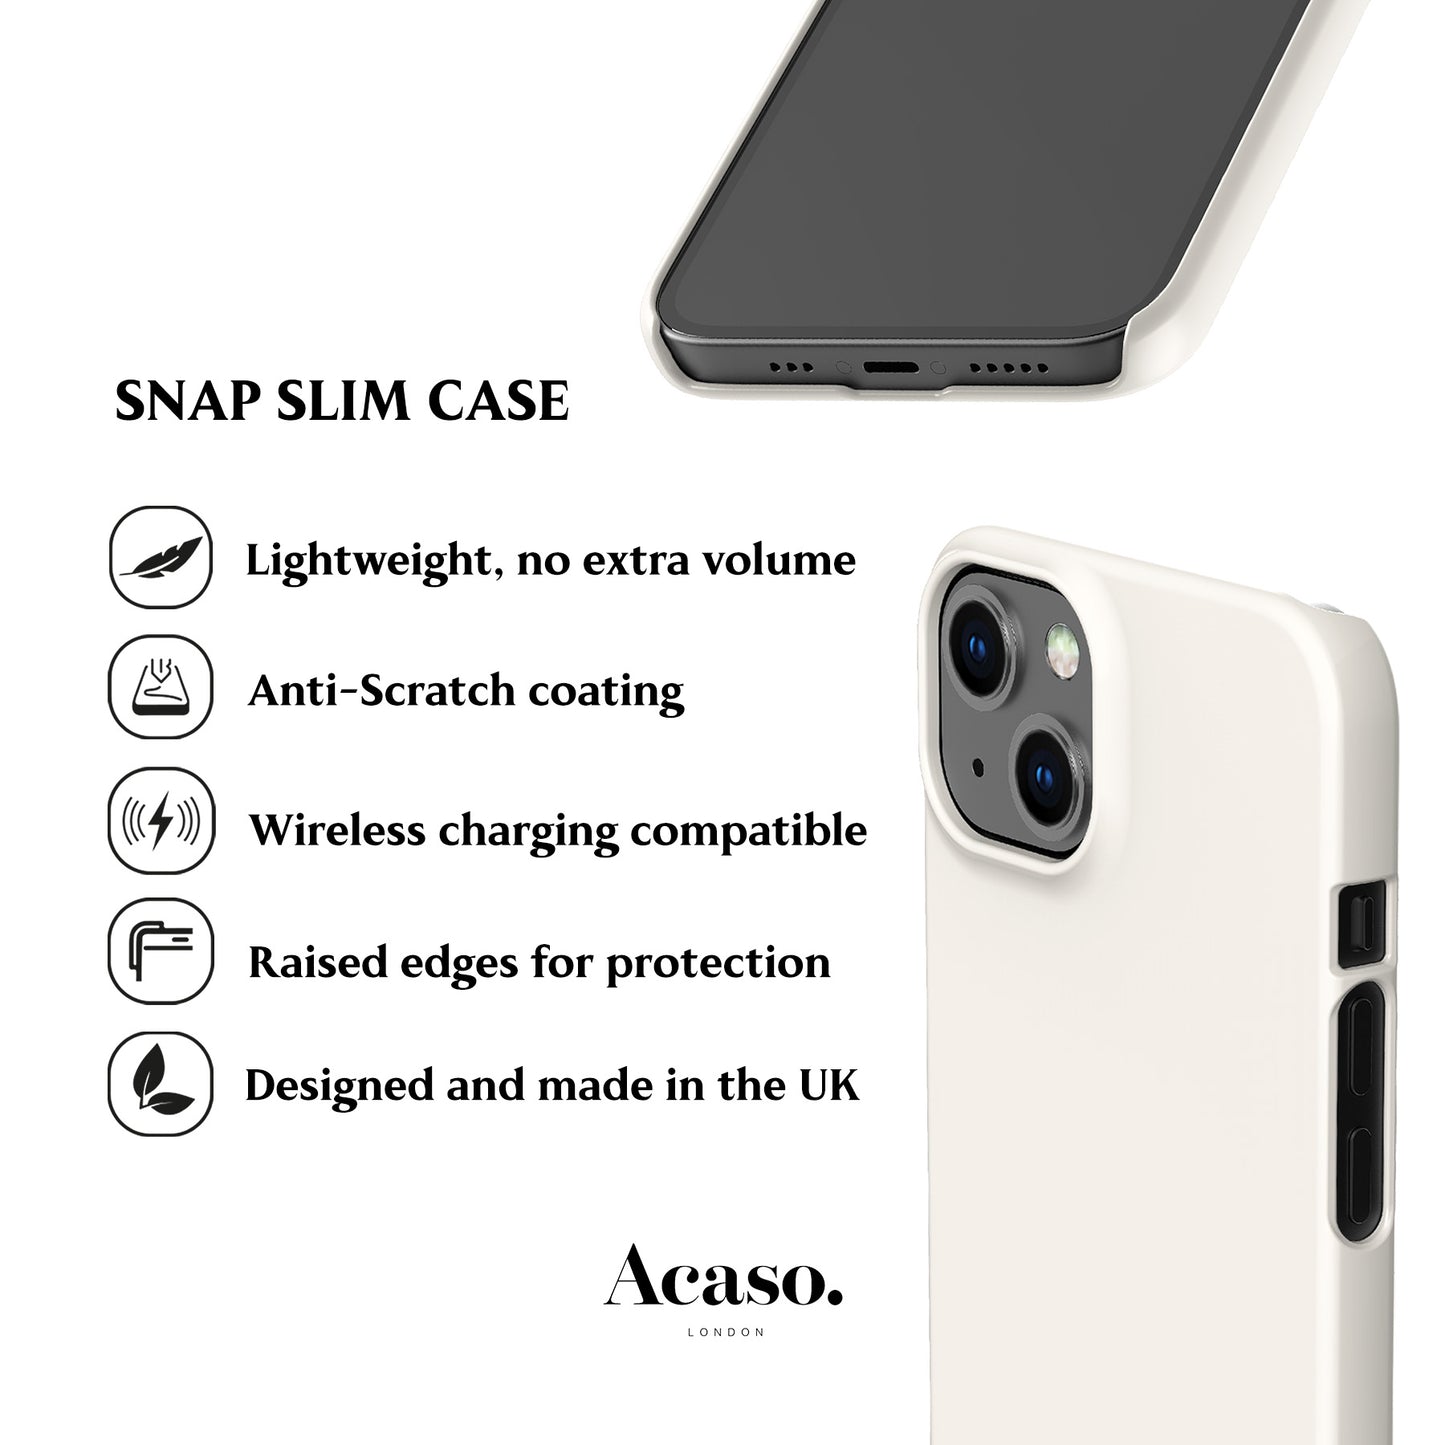 Custom Initials Ivory Phone Case